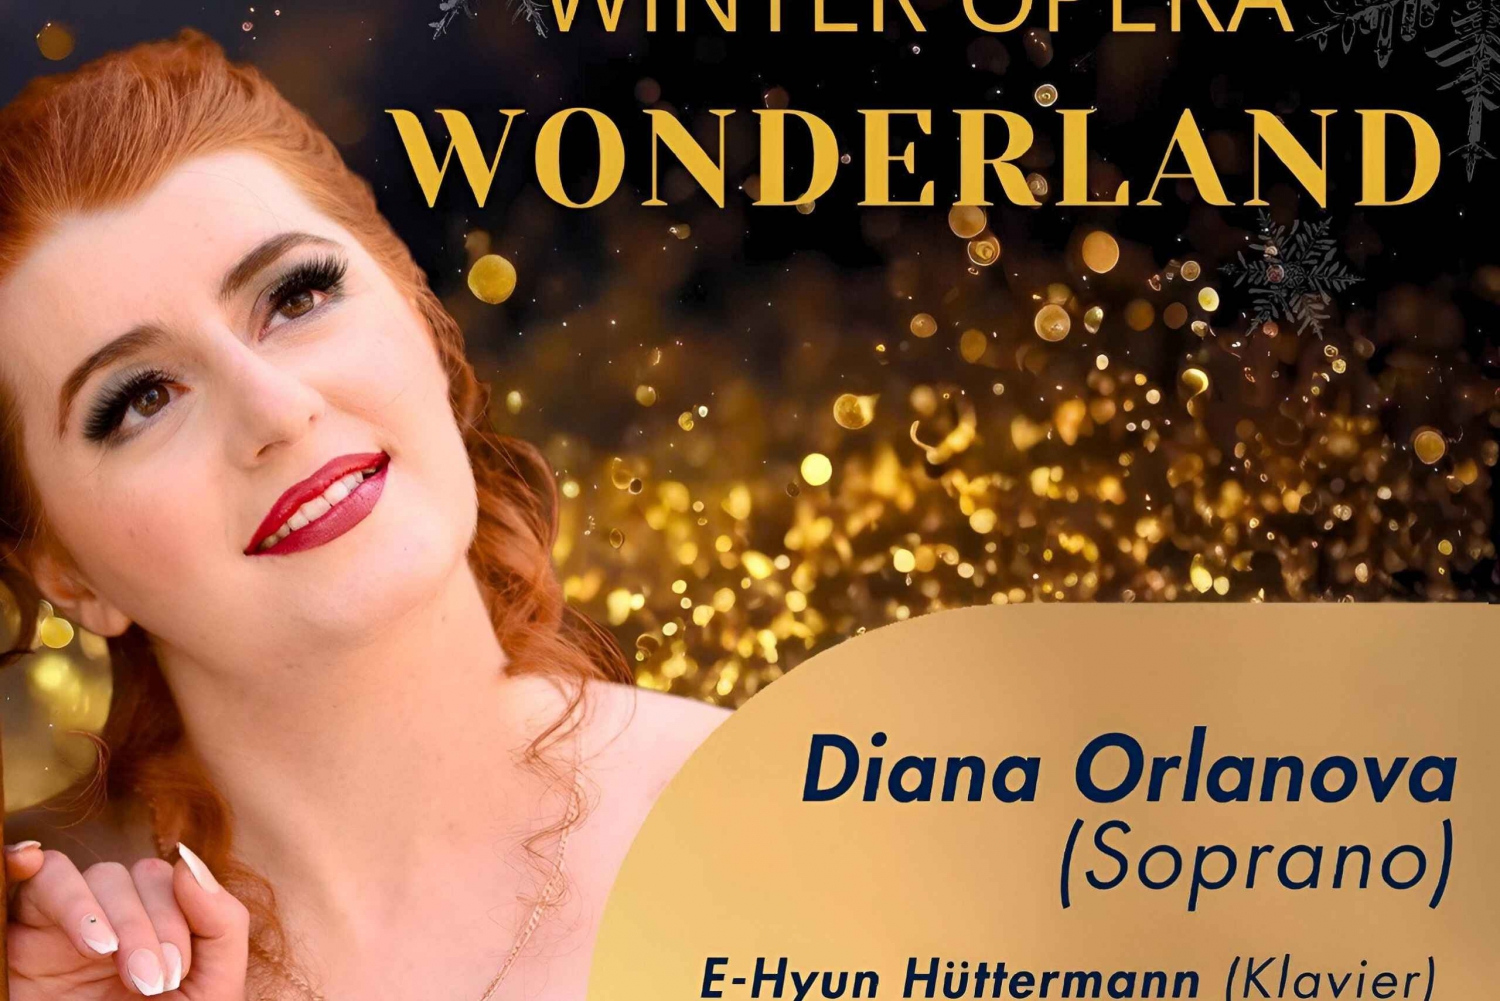 Vinteroperaens vidunderland: Tematisk operakoncert i Wien